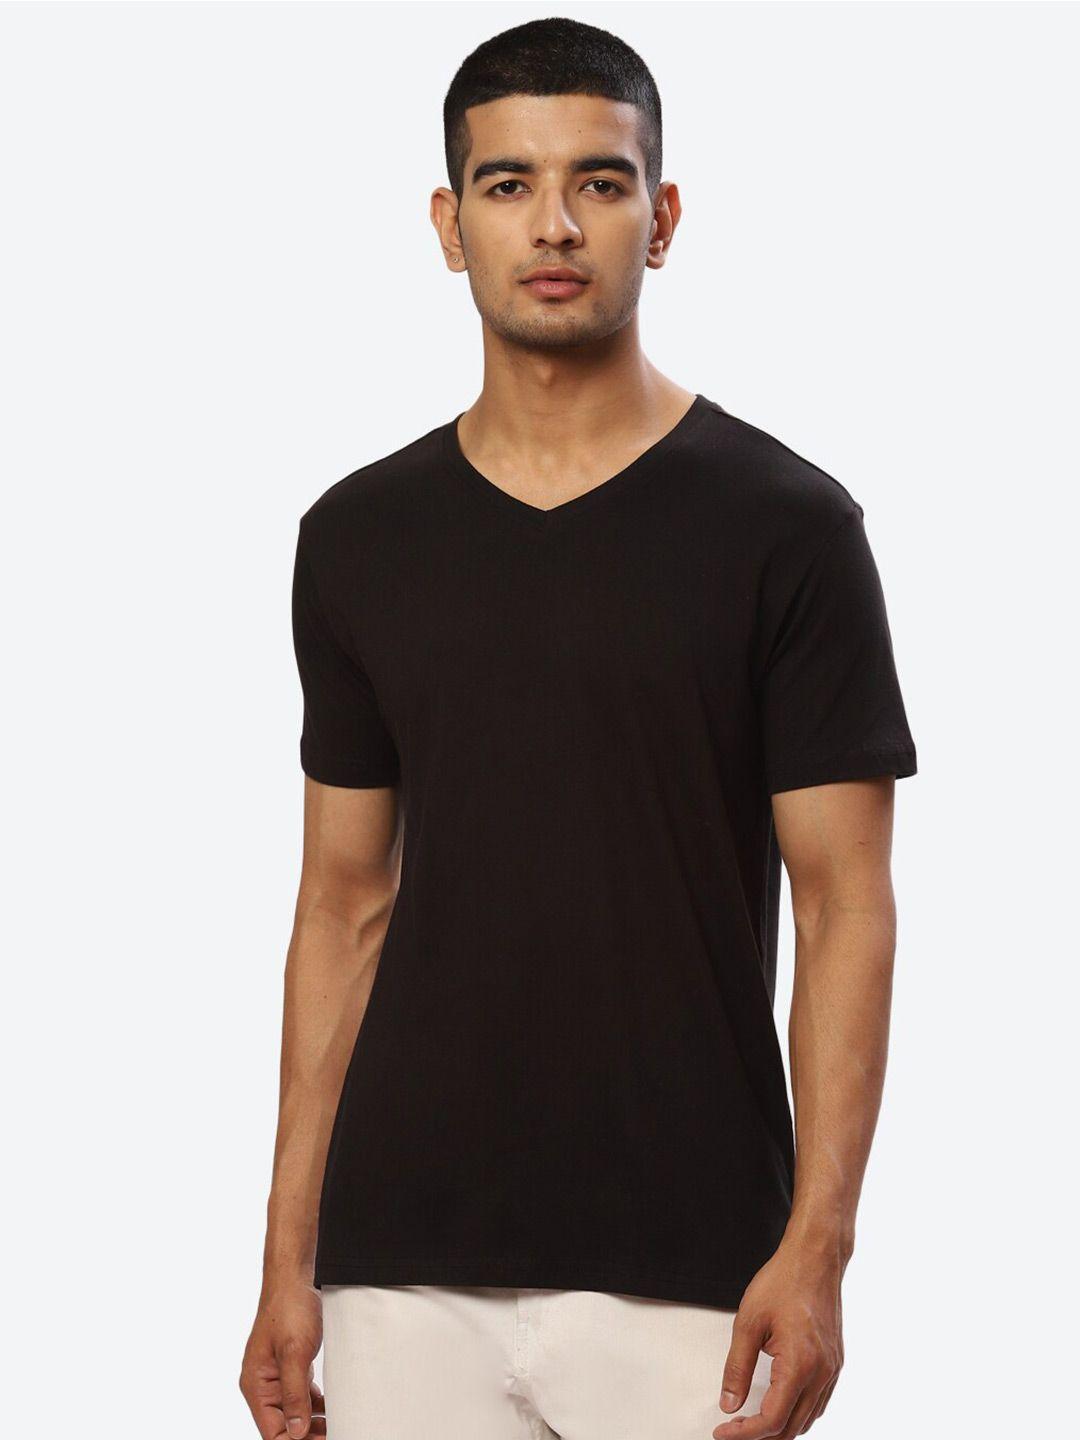 2bme v-neck short sleeves cotton t-shirt